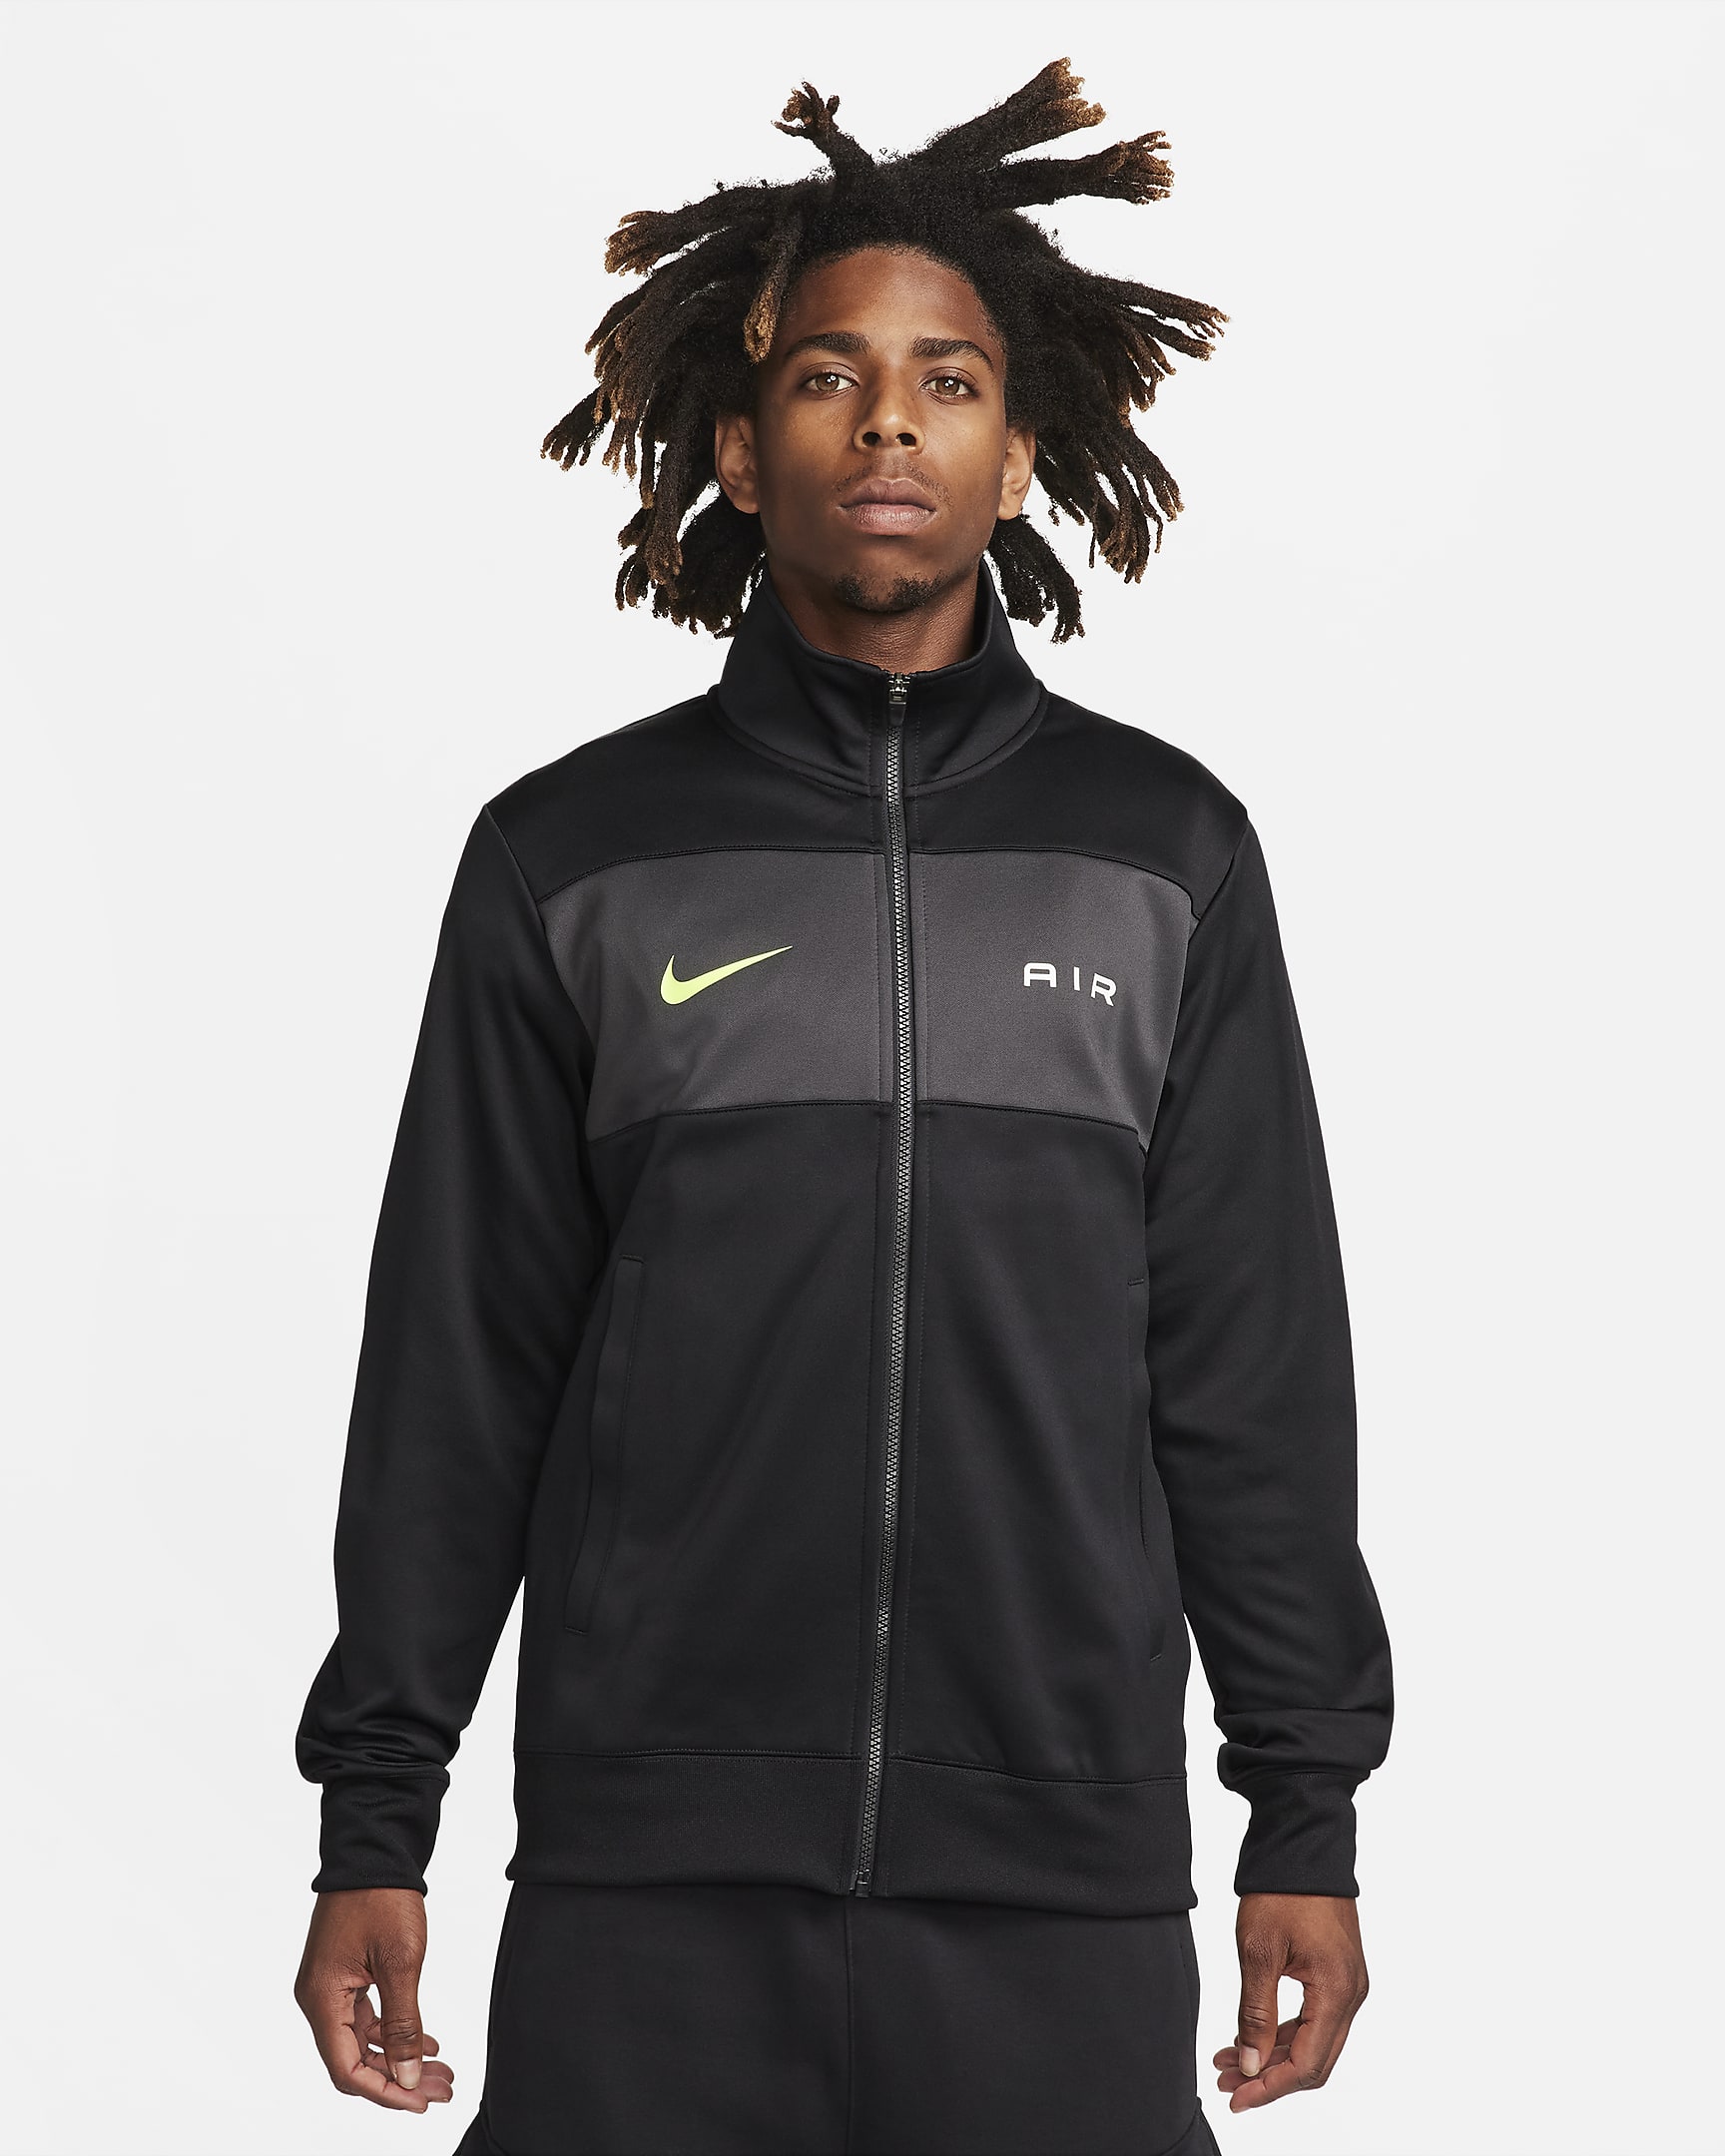 Nike Air Men's Tracksuit Jacket. Nike RO